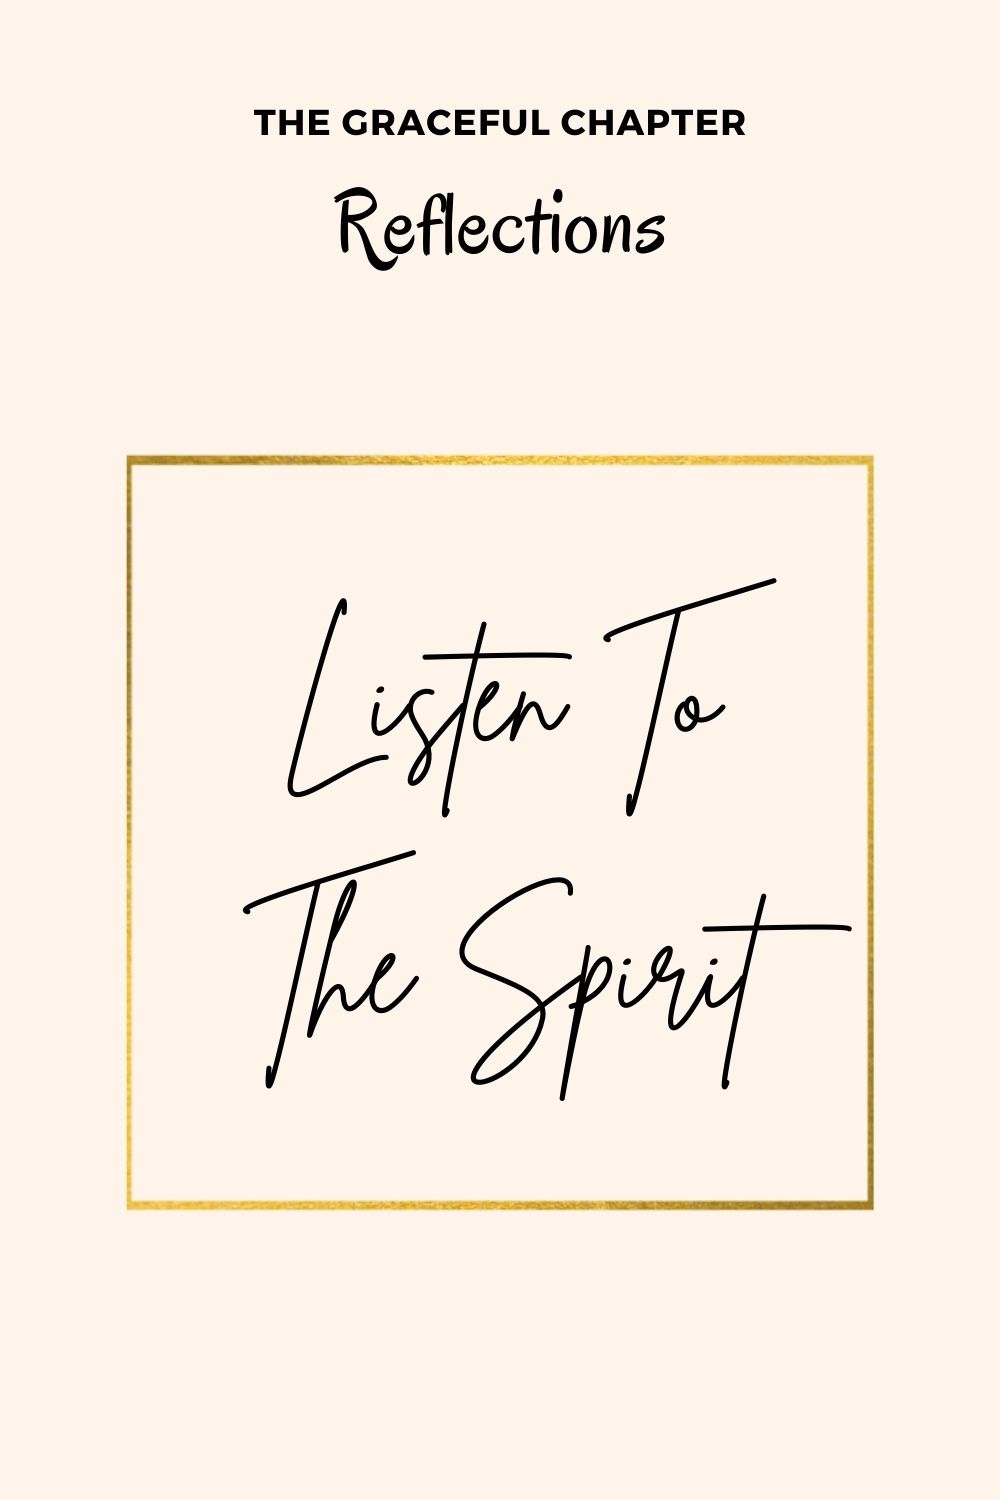 Reflection - Luke 2:25-32 - Listen To The Spirit